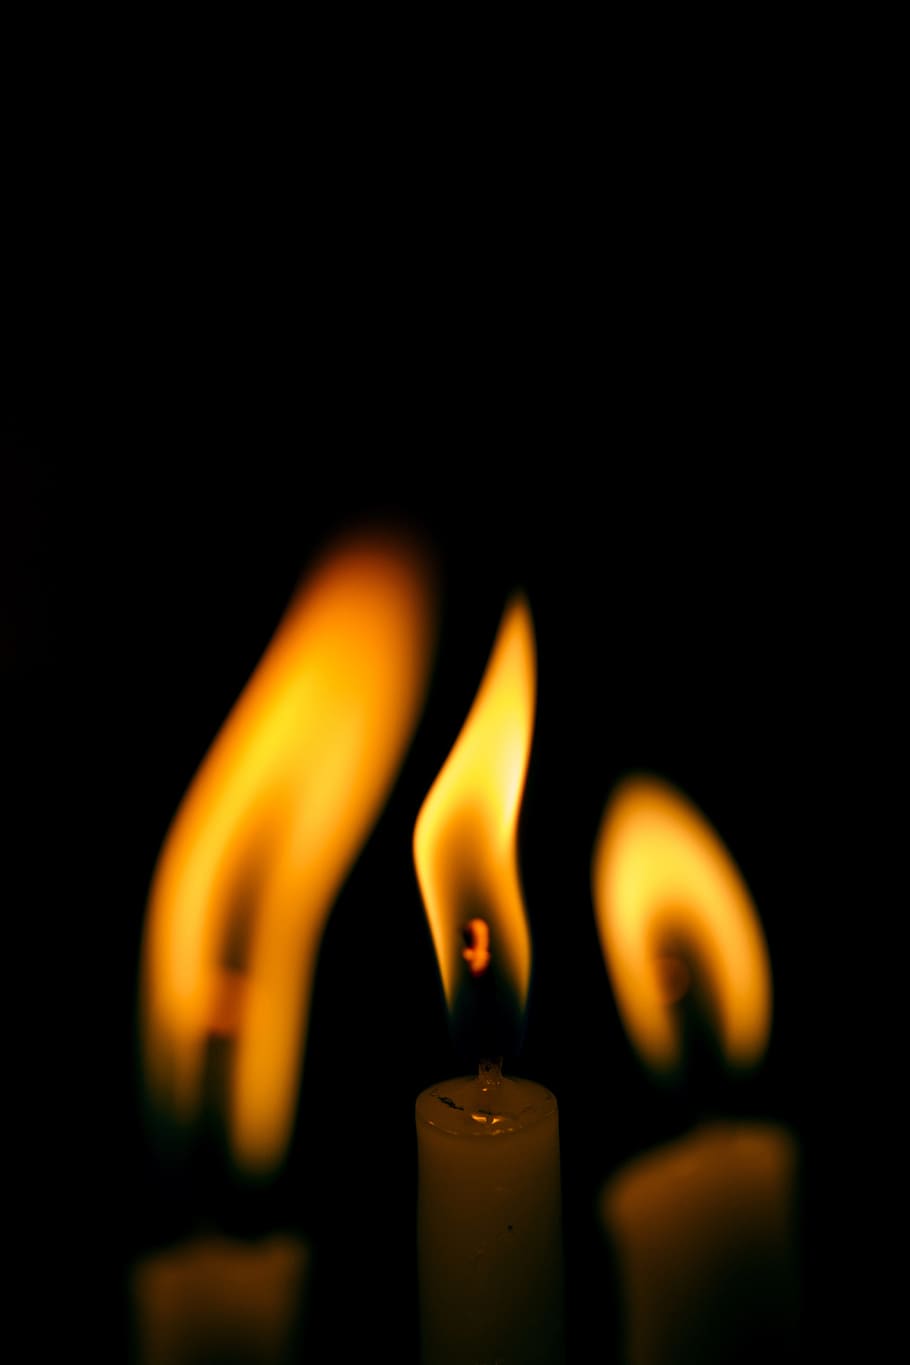 llama, quemar, quemado, inflamable, oscuro, vela, meditación, noche, luz, lámpara de aceite